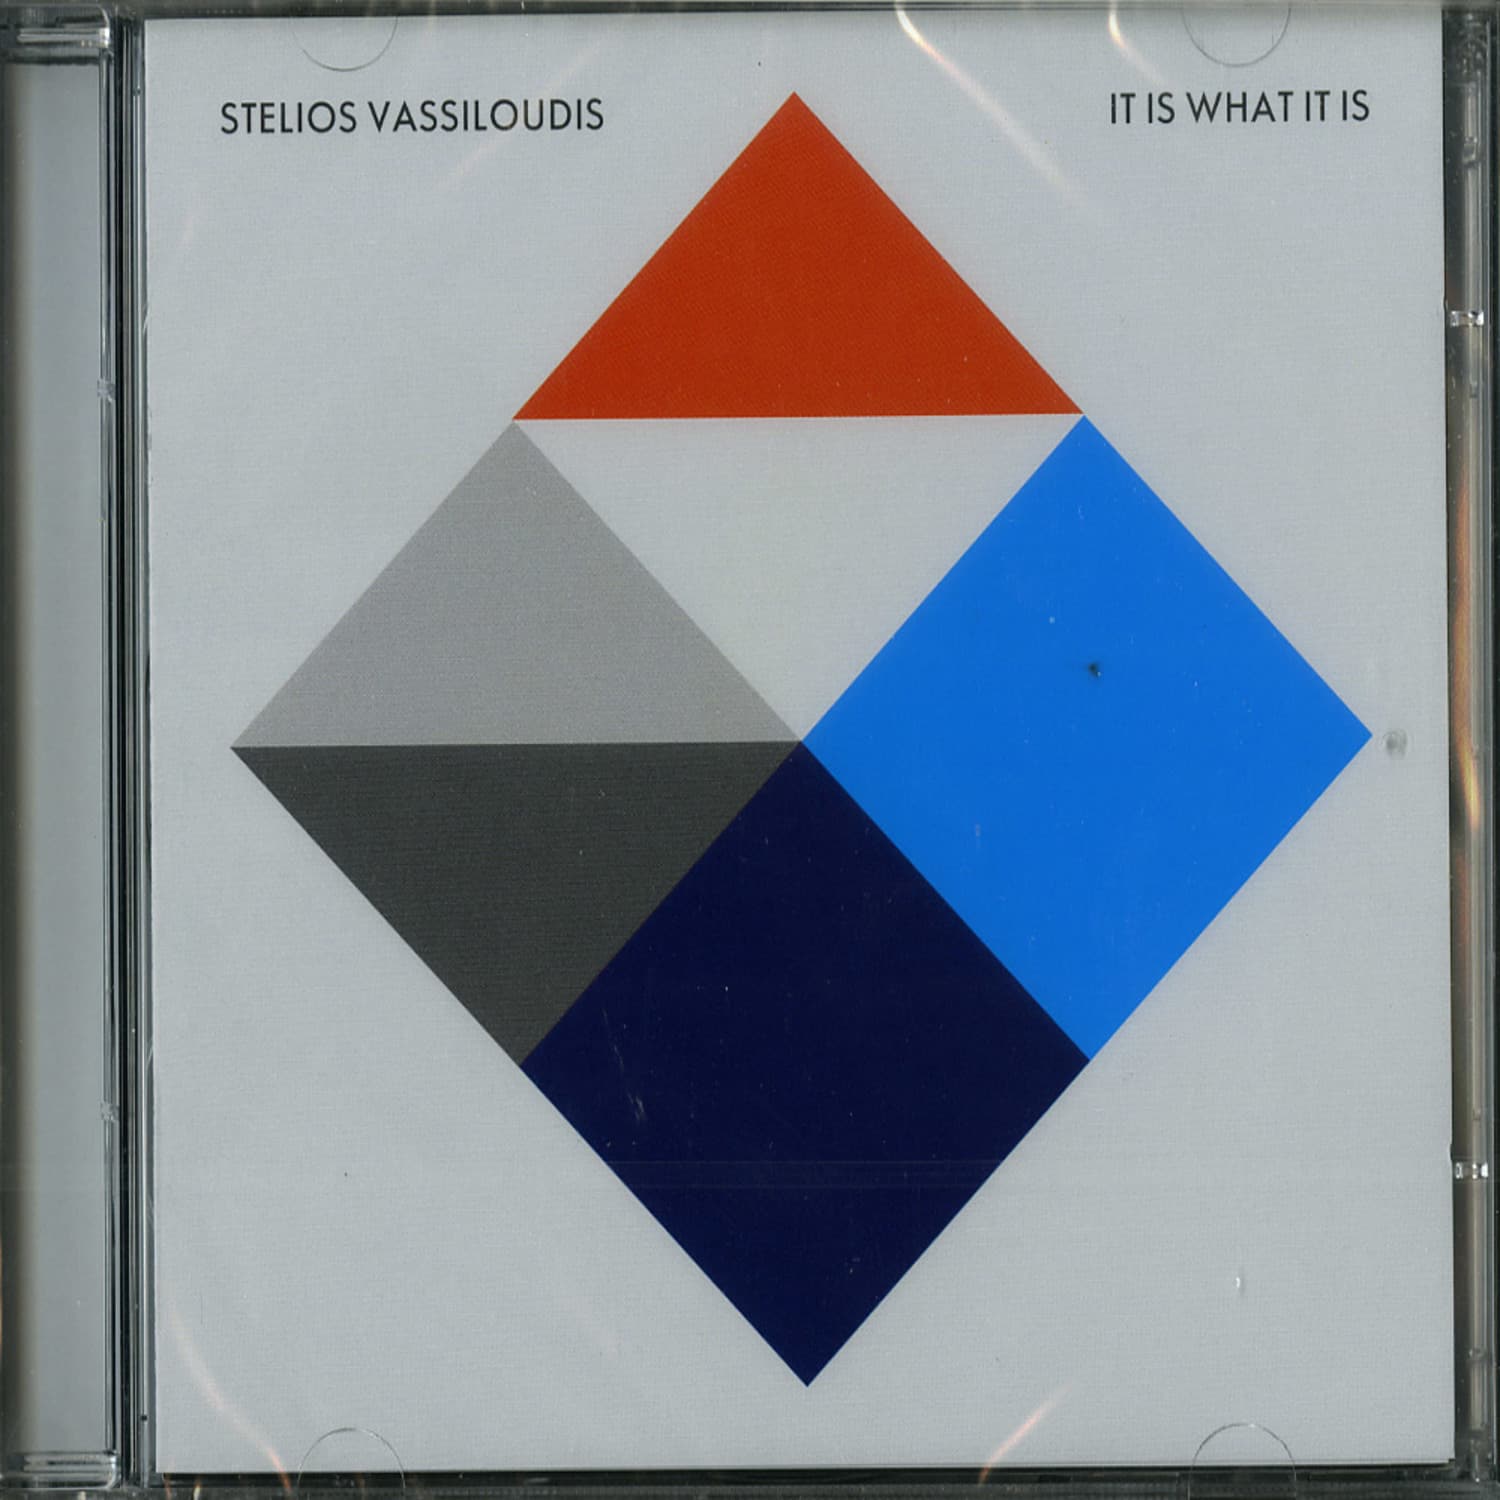 Stelios Vassiloudis - IT IS WHAT IT IS 